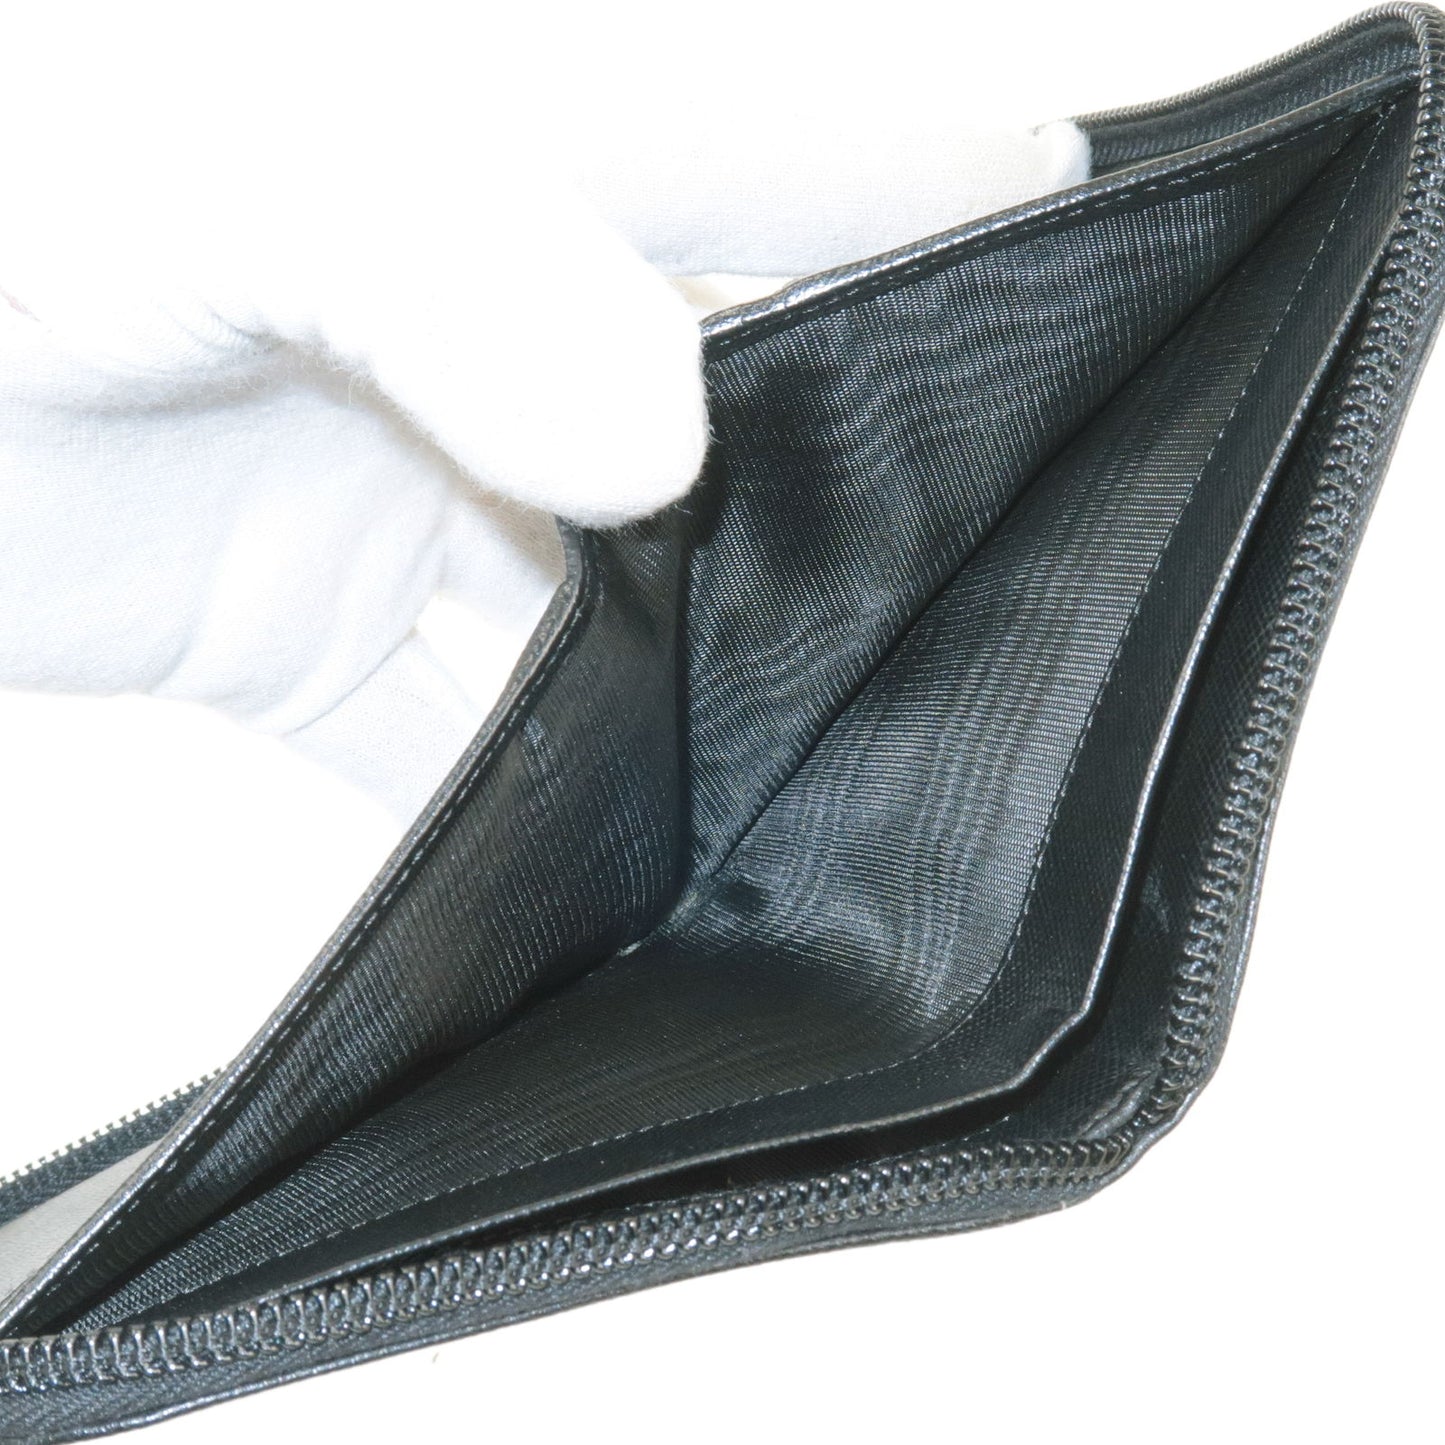 PRADA Logo Leather Round Zippy Small Wallet Black M606A